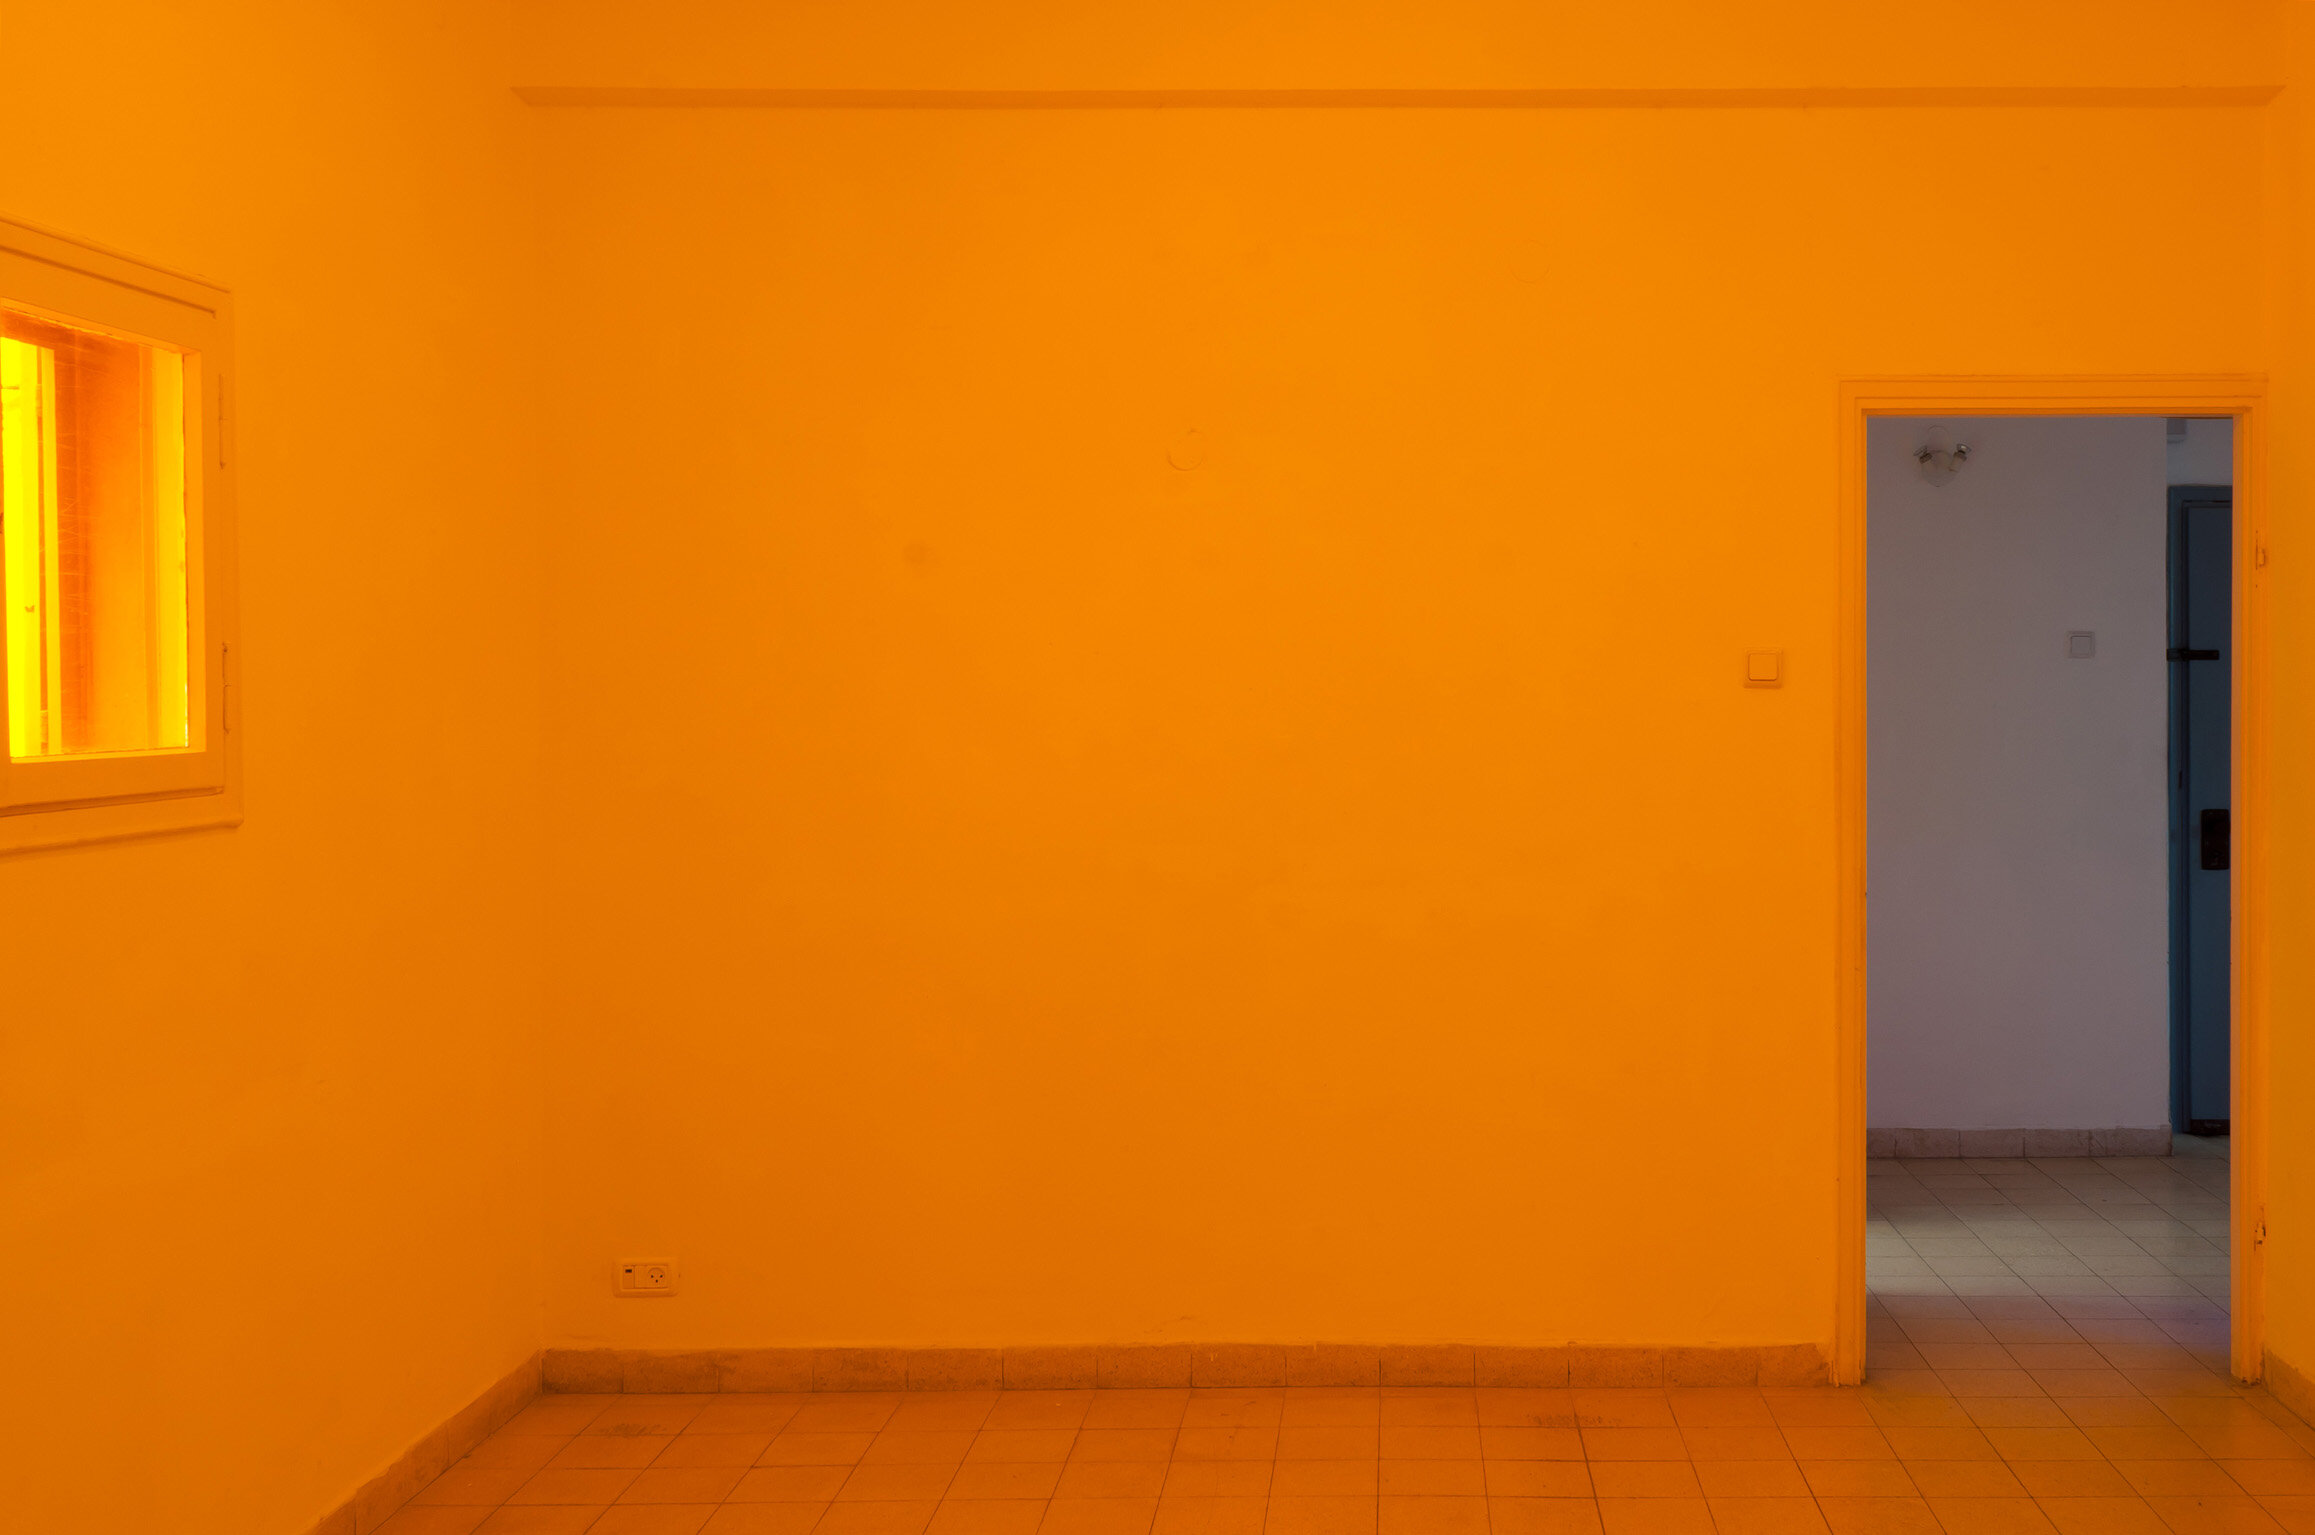 _Orange room hall _ Window  13x18 300dpi.jpg